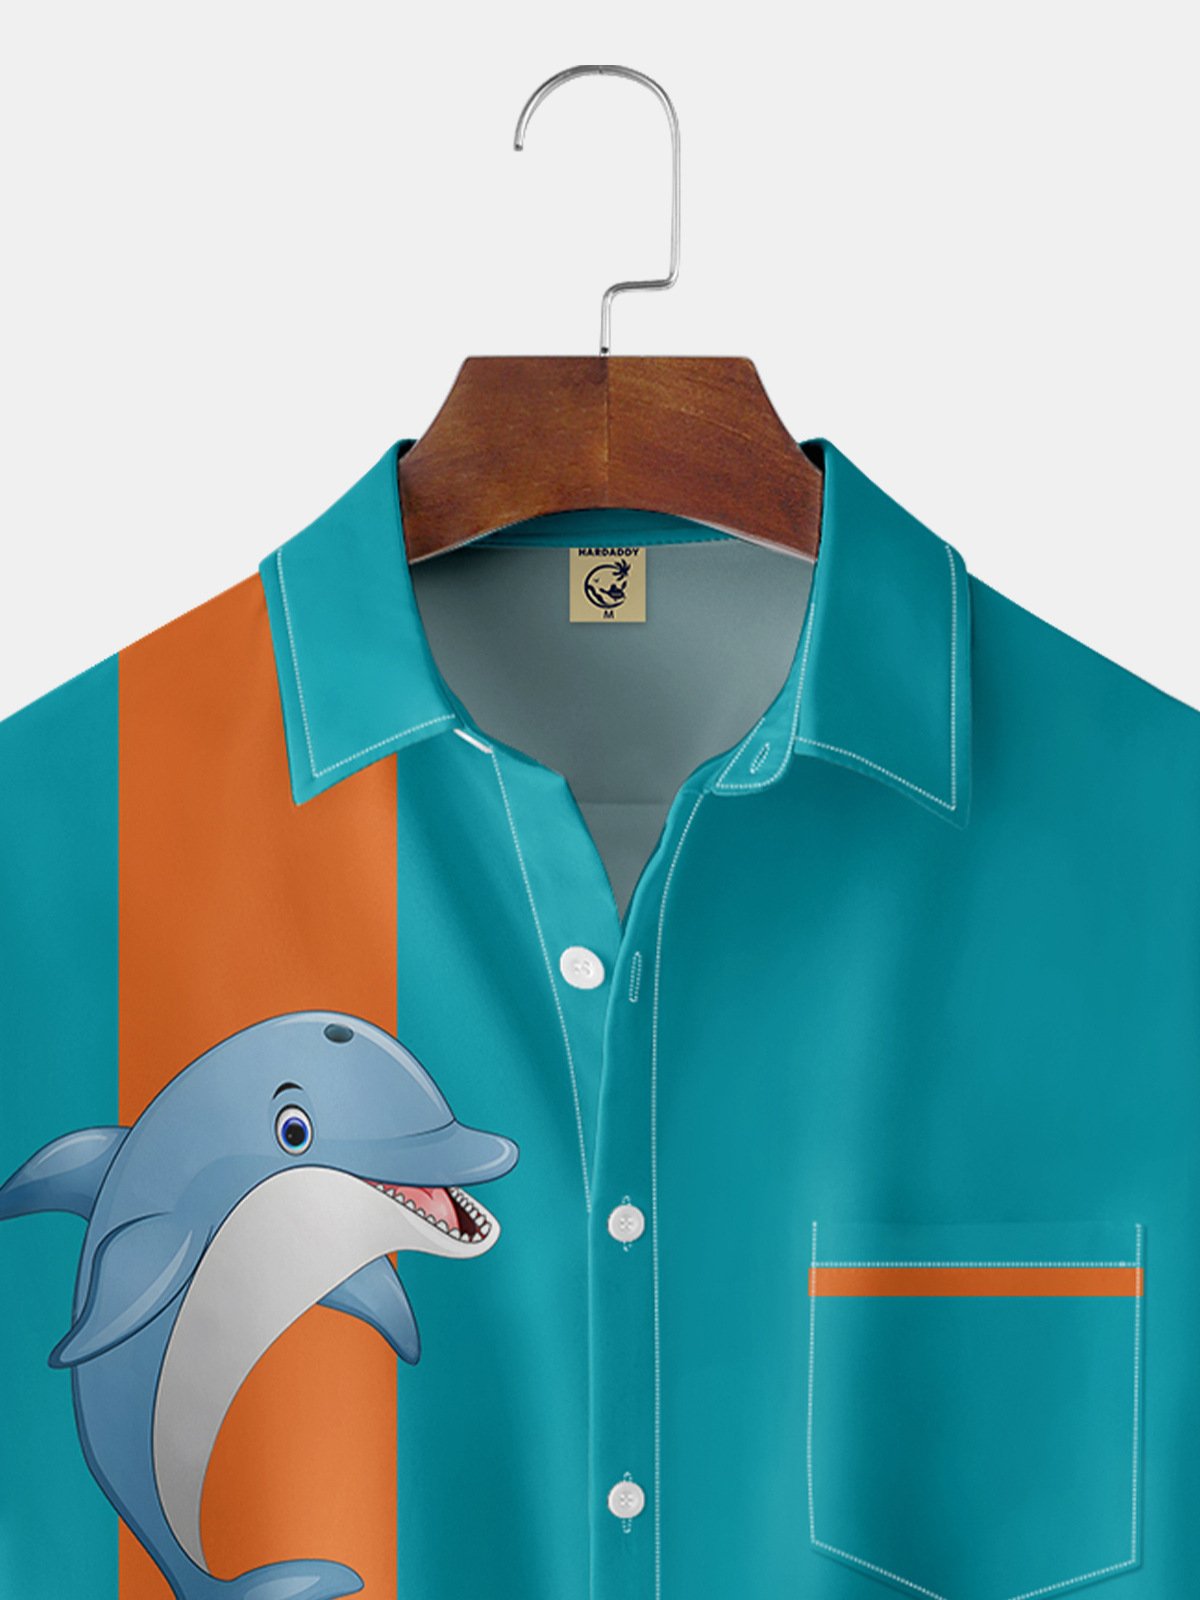 Hardaddy Dolphin Chest Pocket Short Sleeve Bowling Shirt